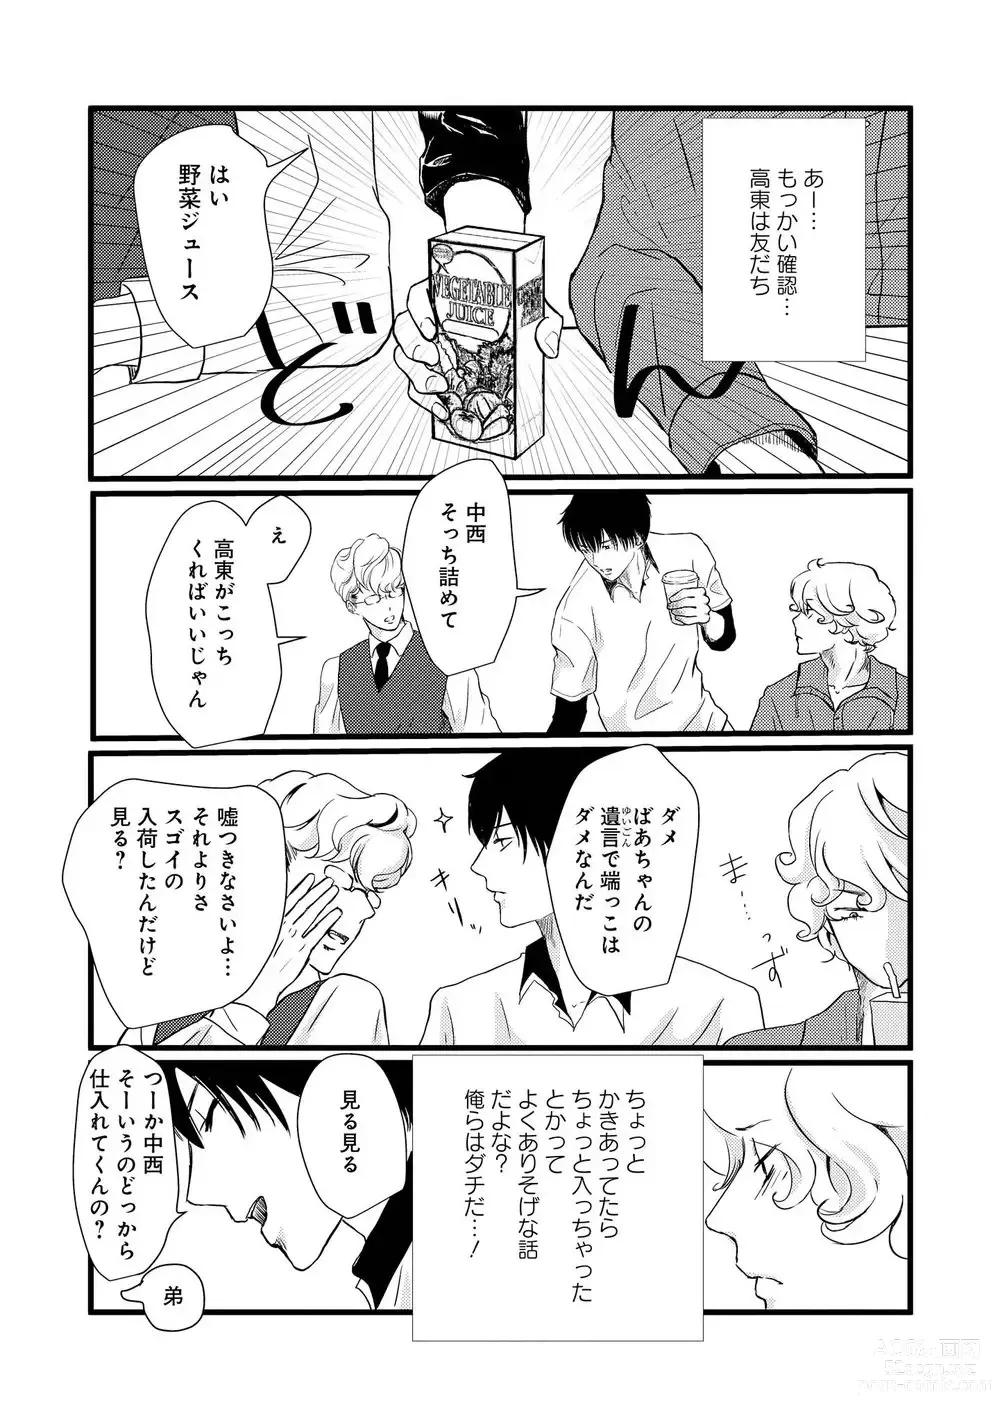 Page 18 of manga AHOERO